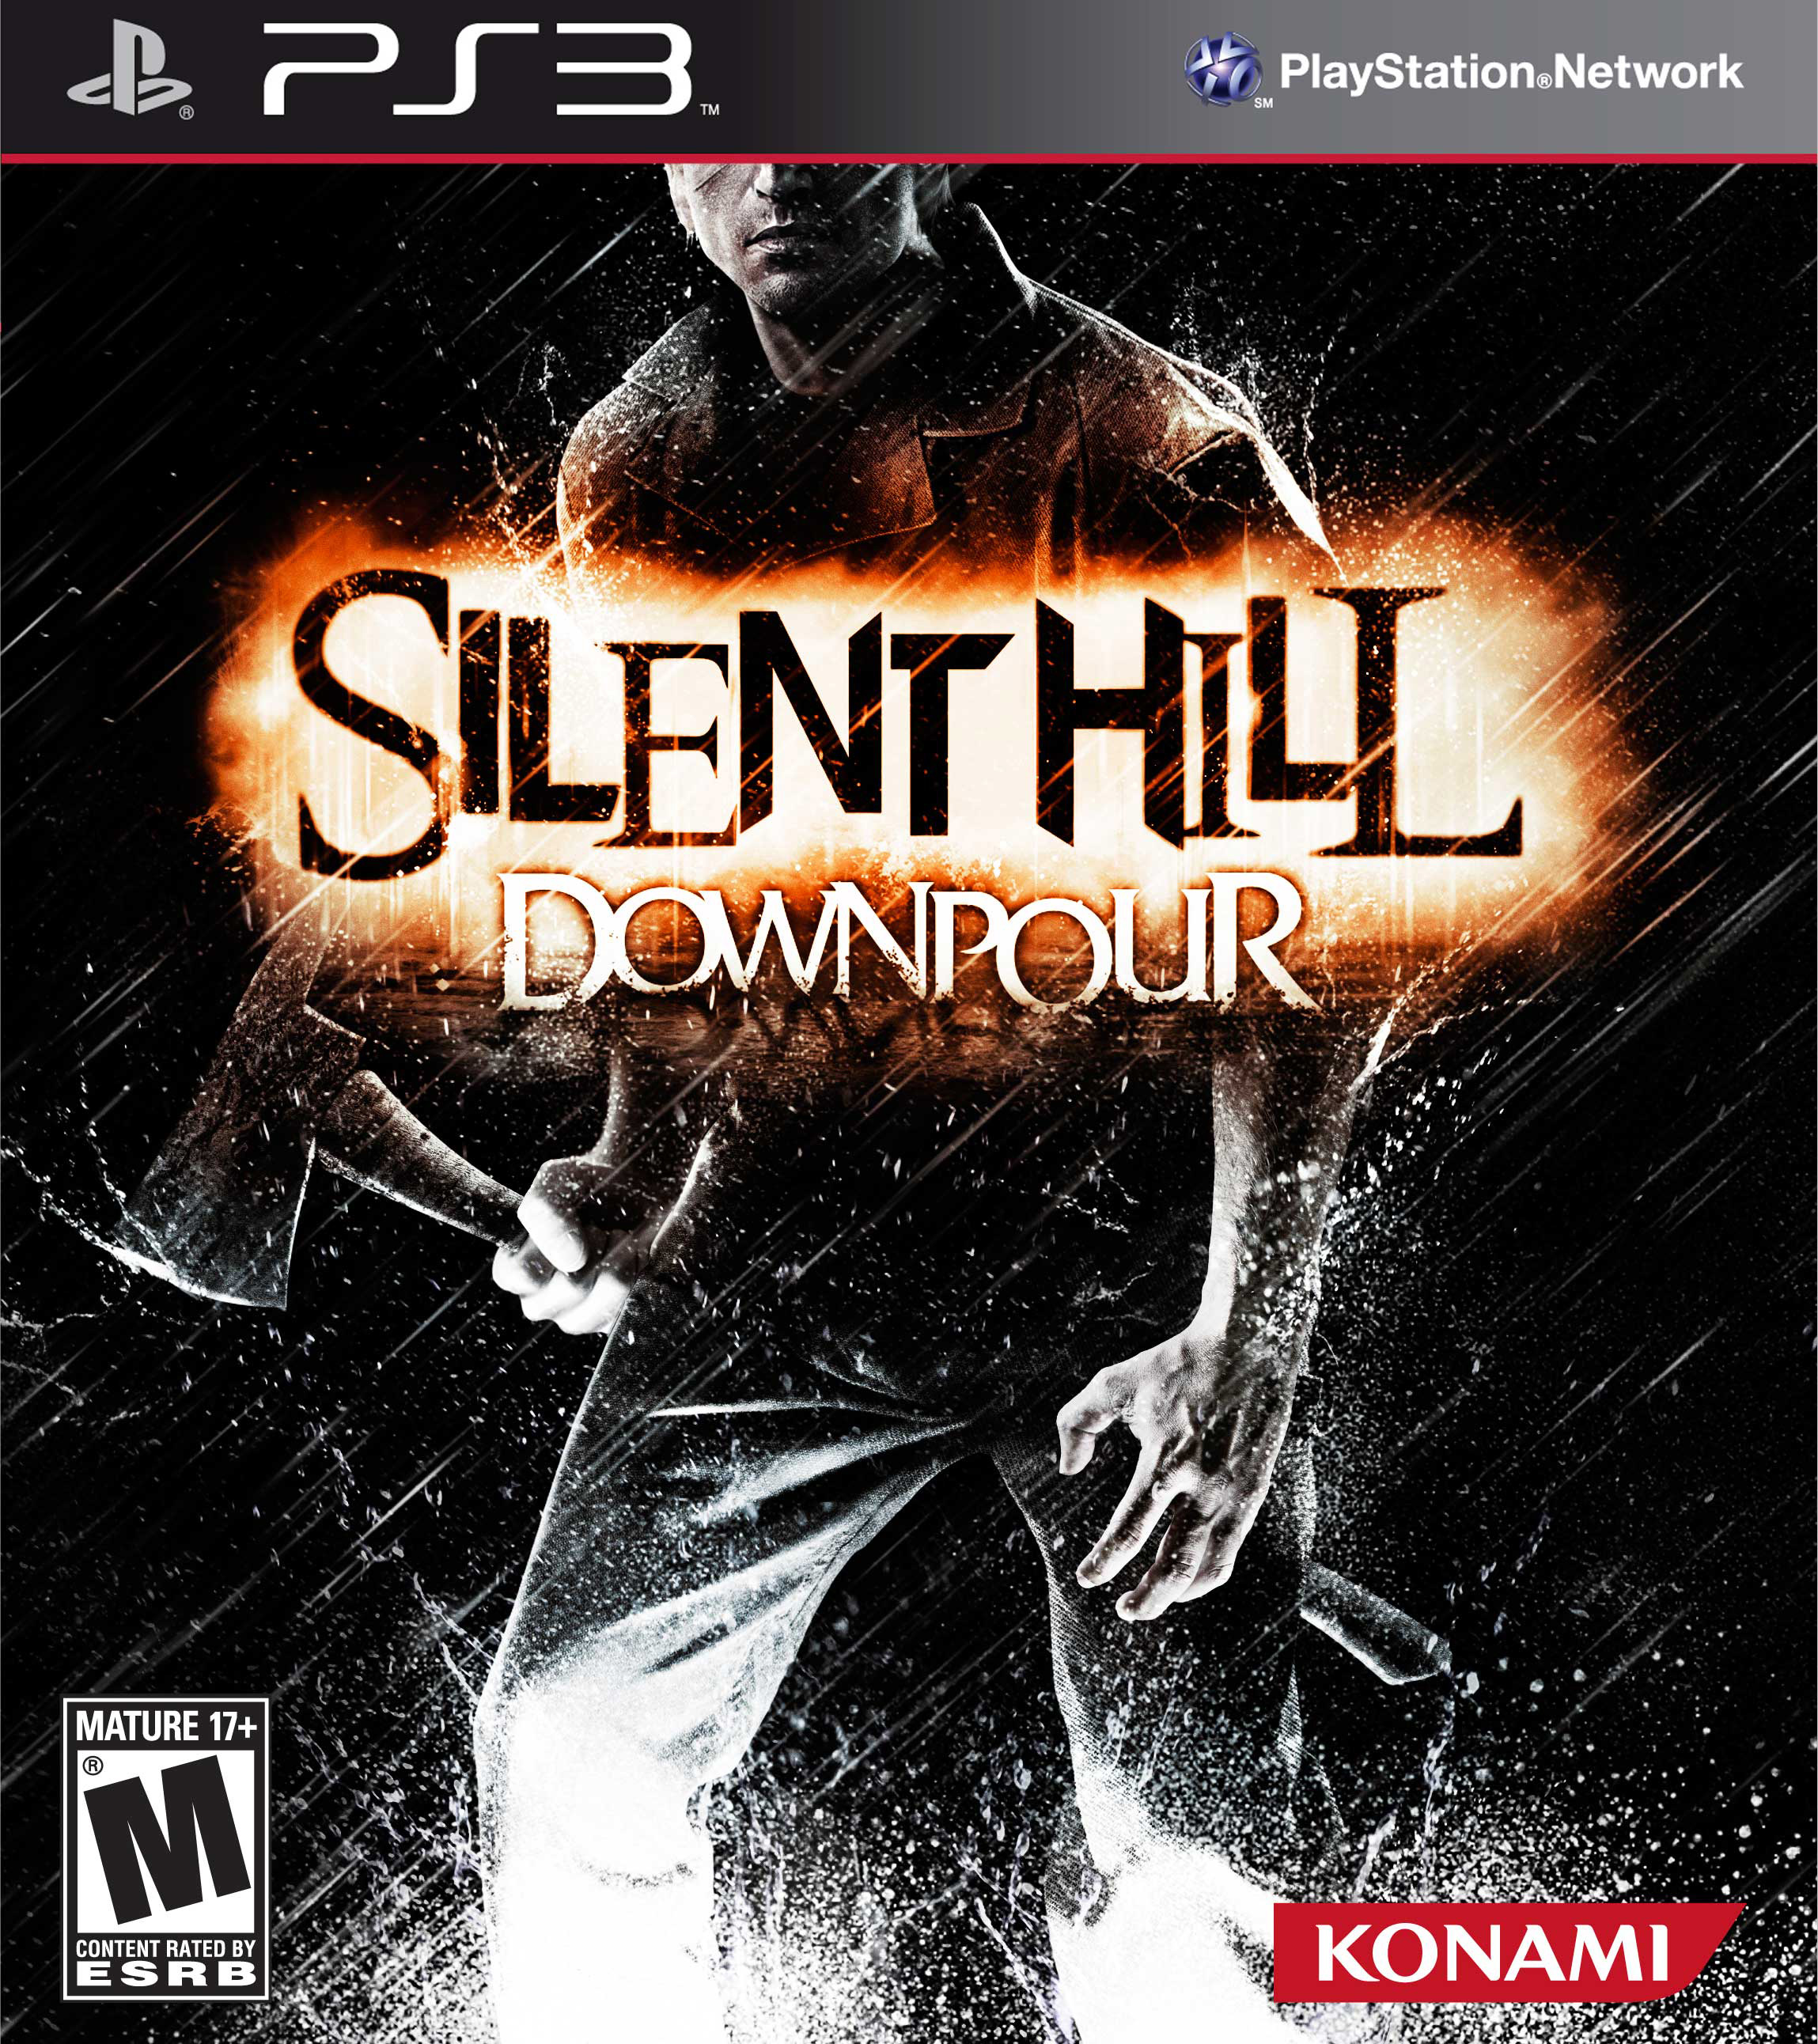 High Resolution Wallpaper | Silent Hill: Downpour  2298x2584 px